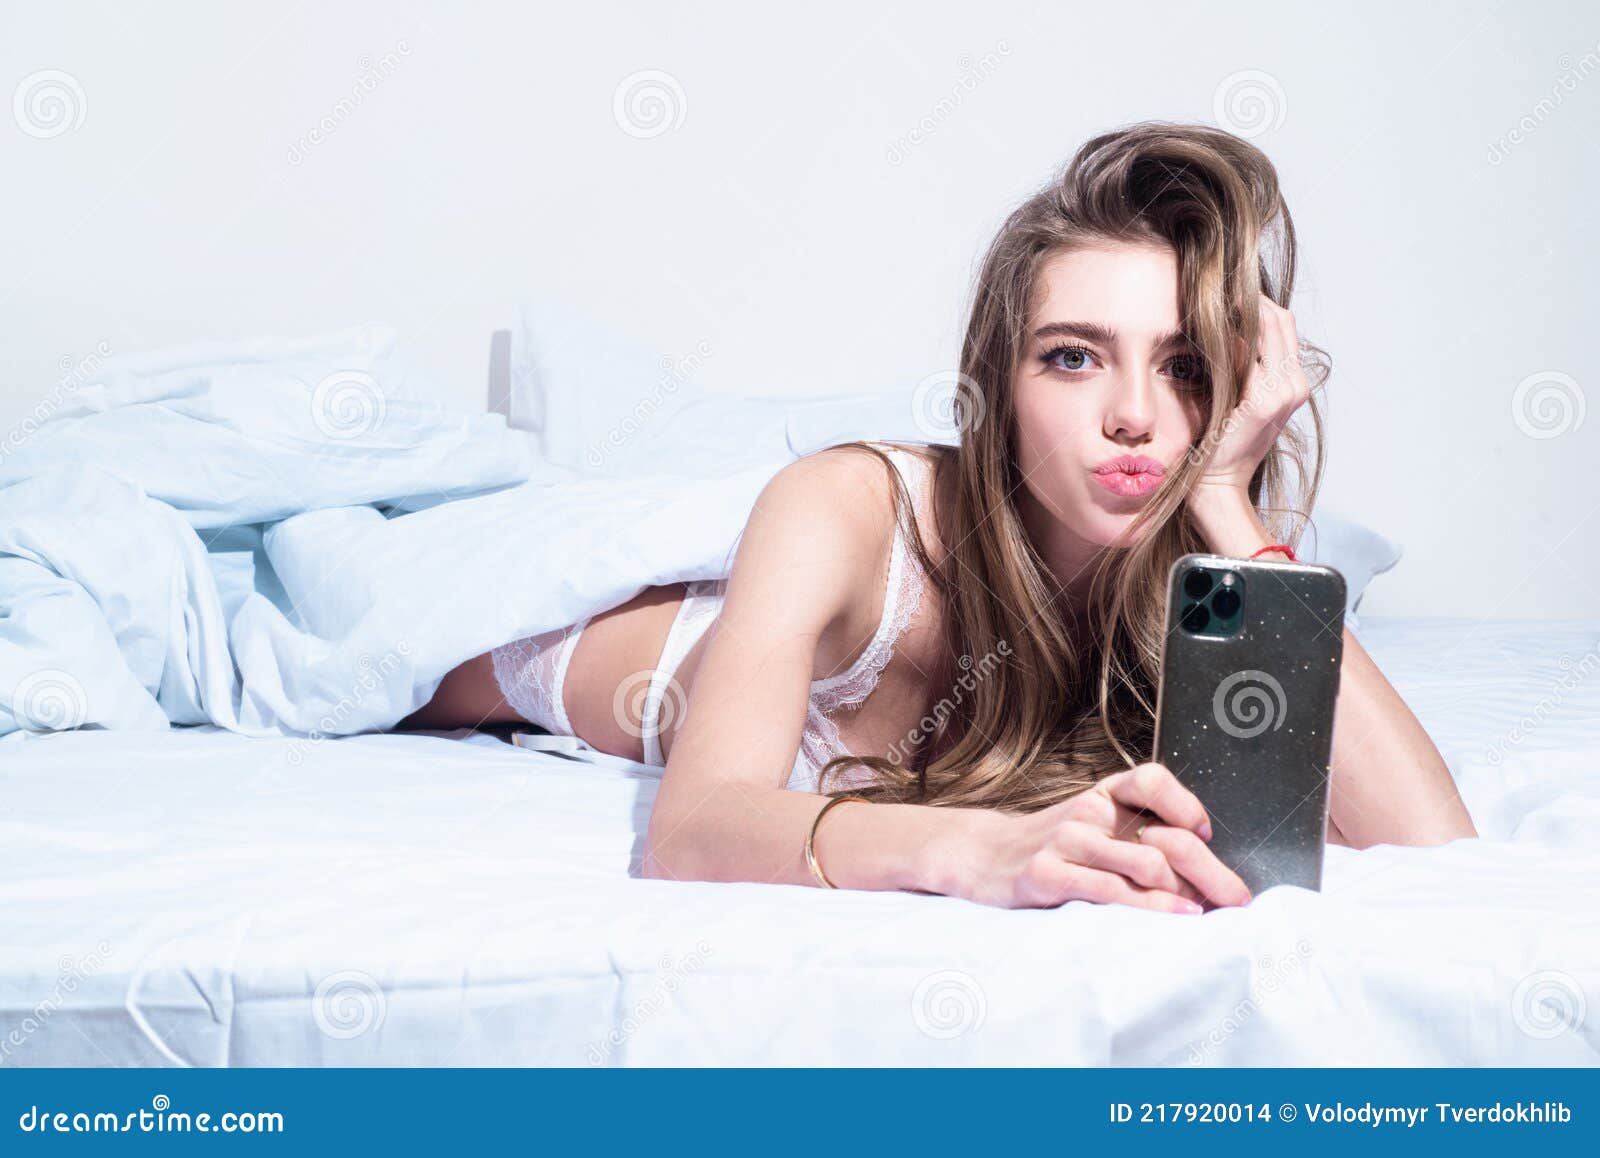 Sexy Women Cellphone Wallpapers